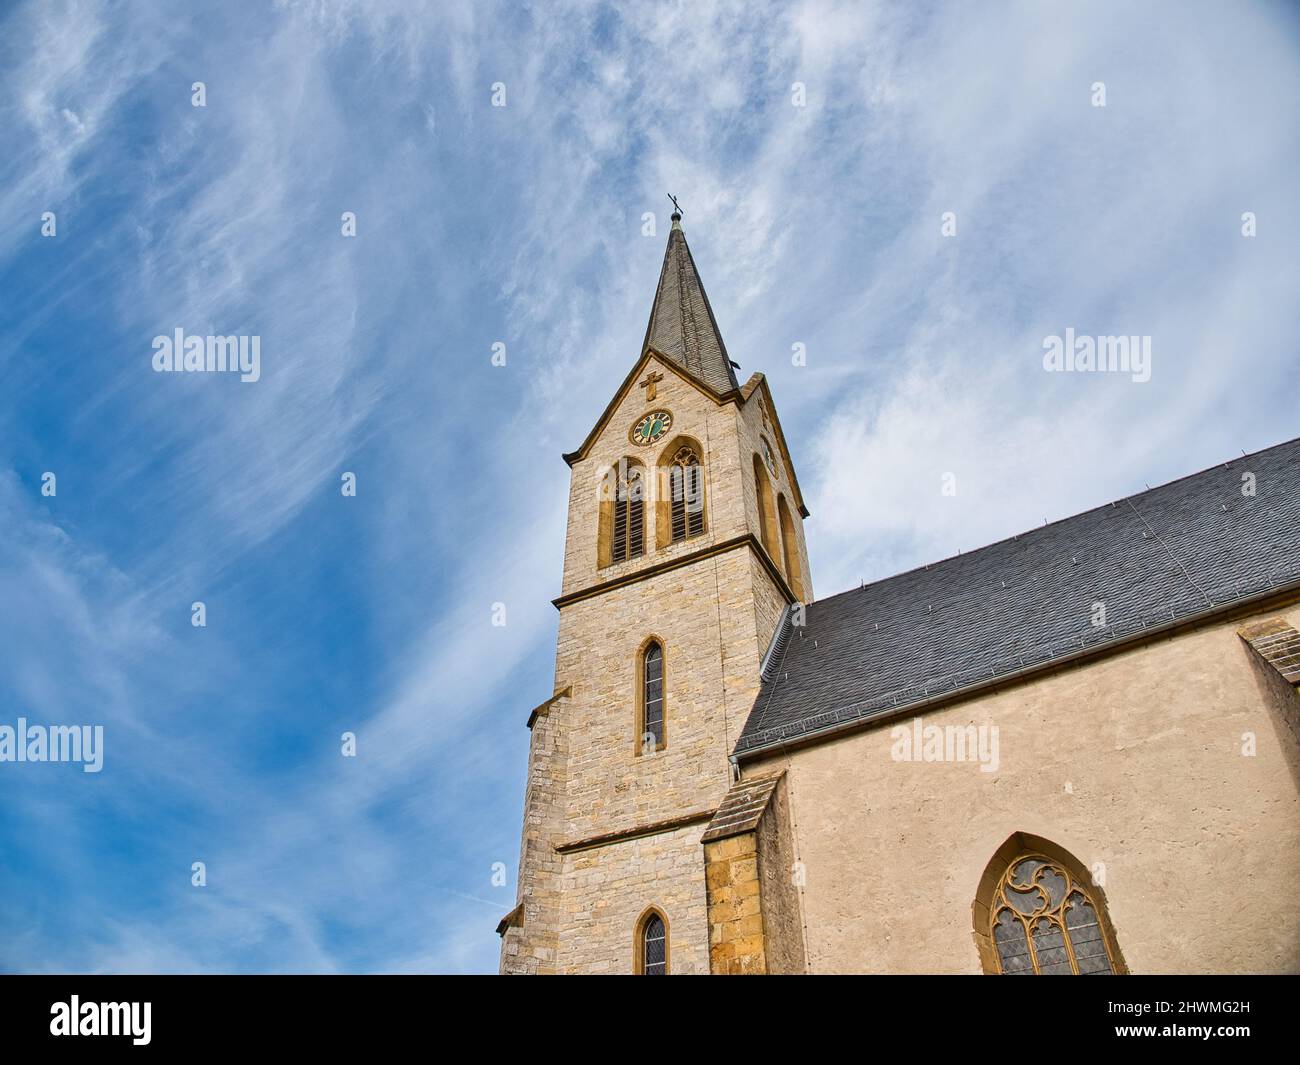 The Stiftskirche Schildesche in Bielefeld Germany during daylight Stock Photo